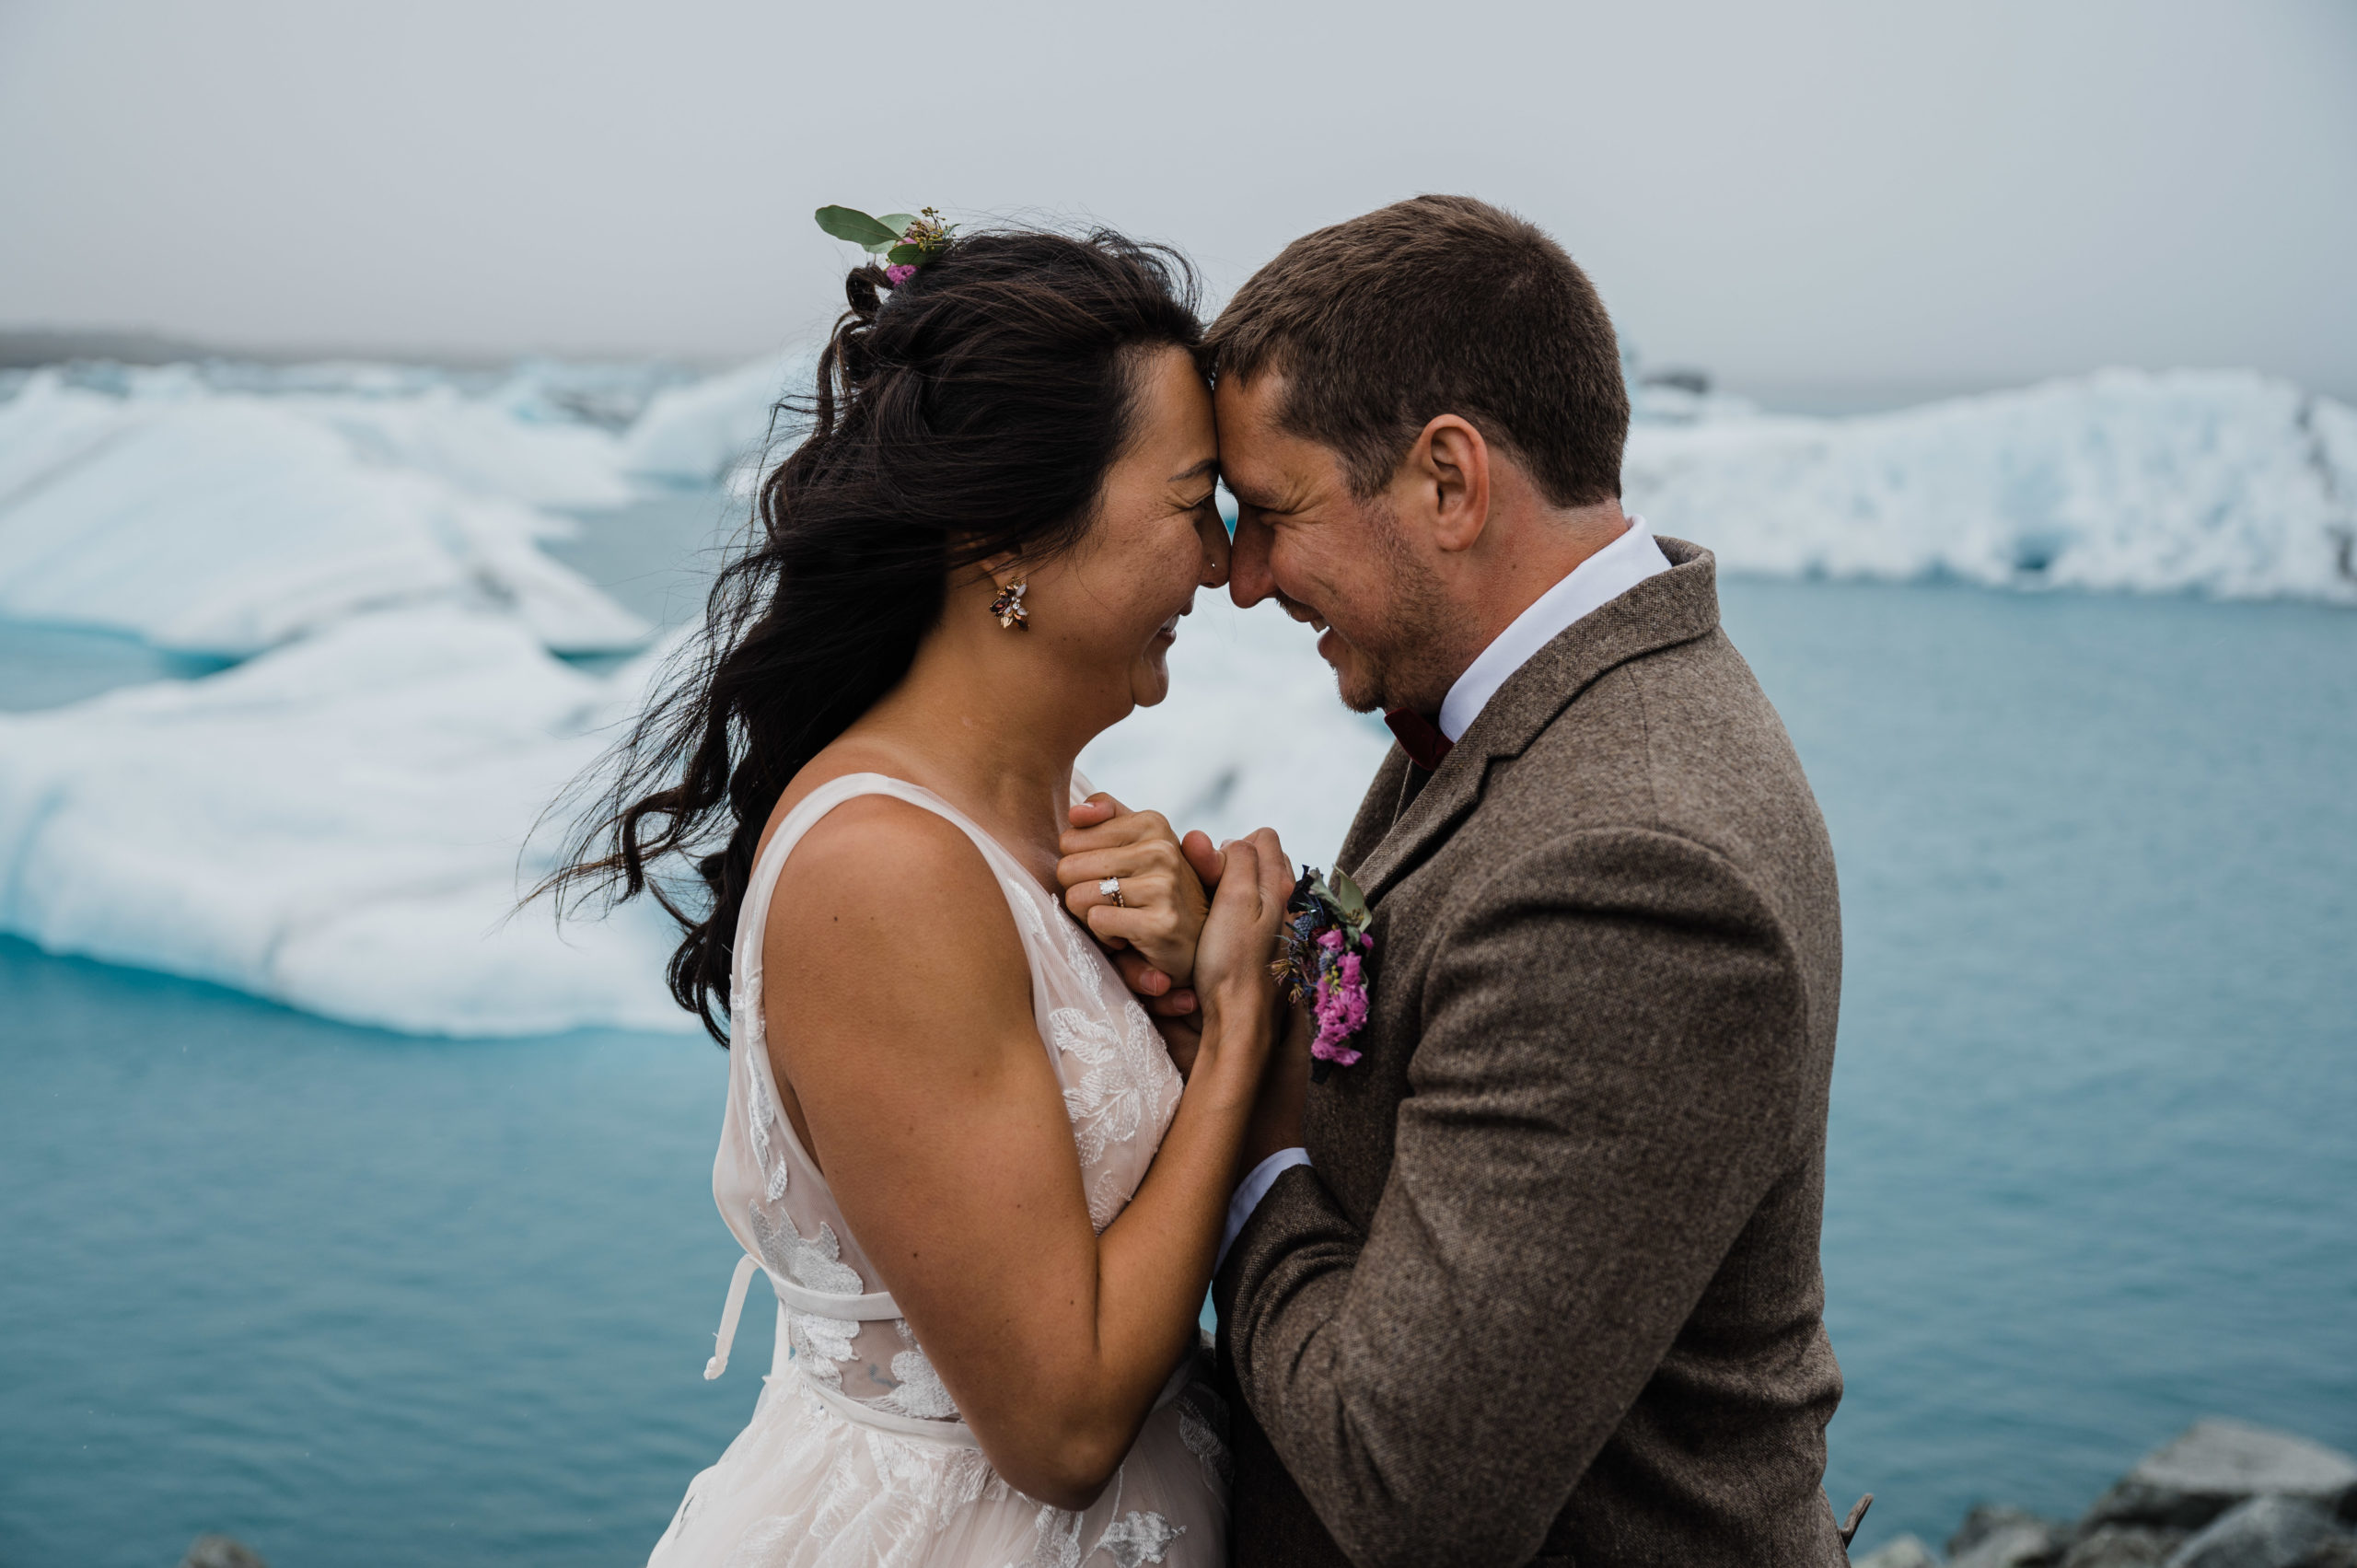 Iceland elopement, glacier elopement, destination elopement photographer, how to elope in Iceland, best places to elope in Iceland, Jokulsarlon Glacier Lagoon